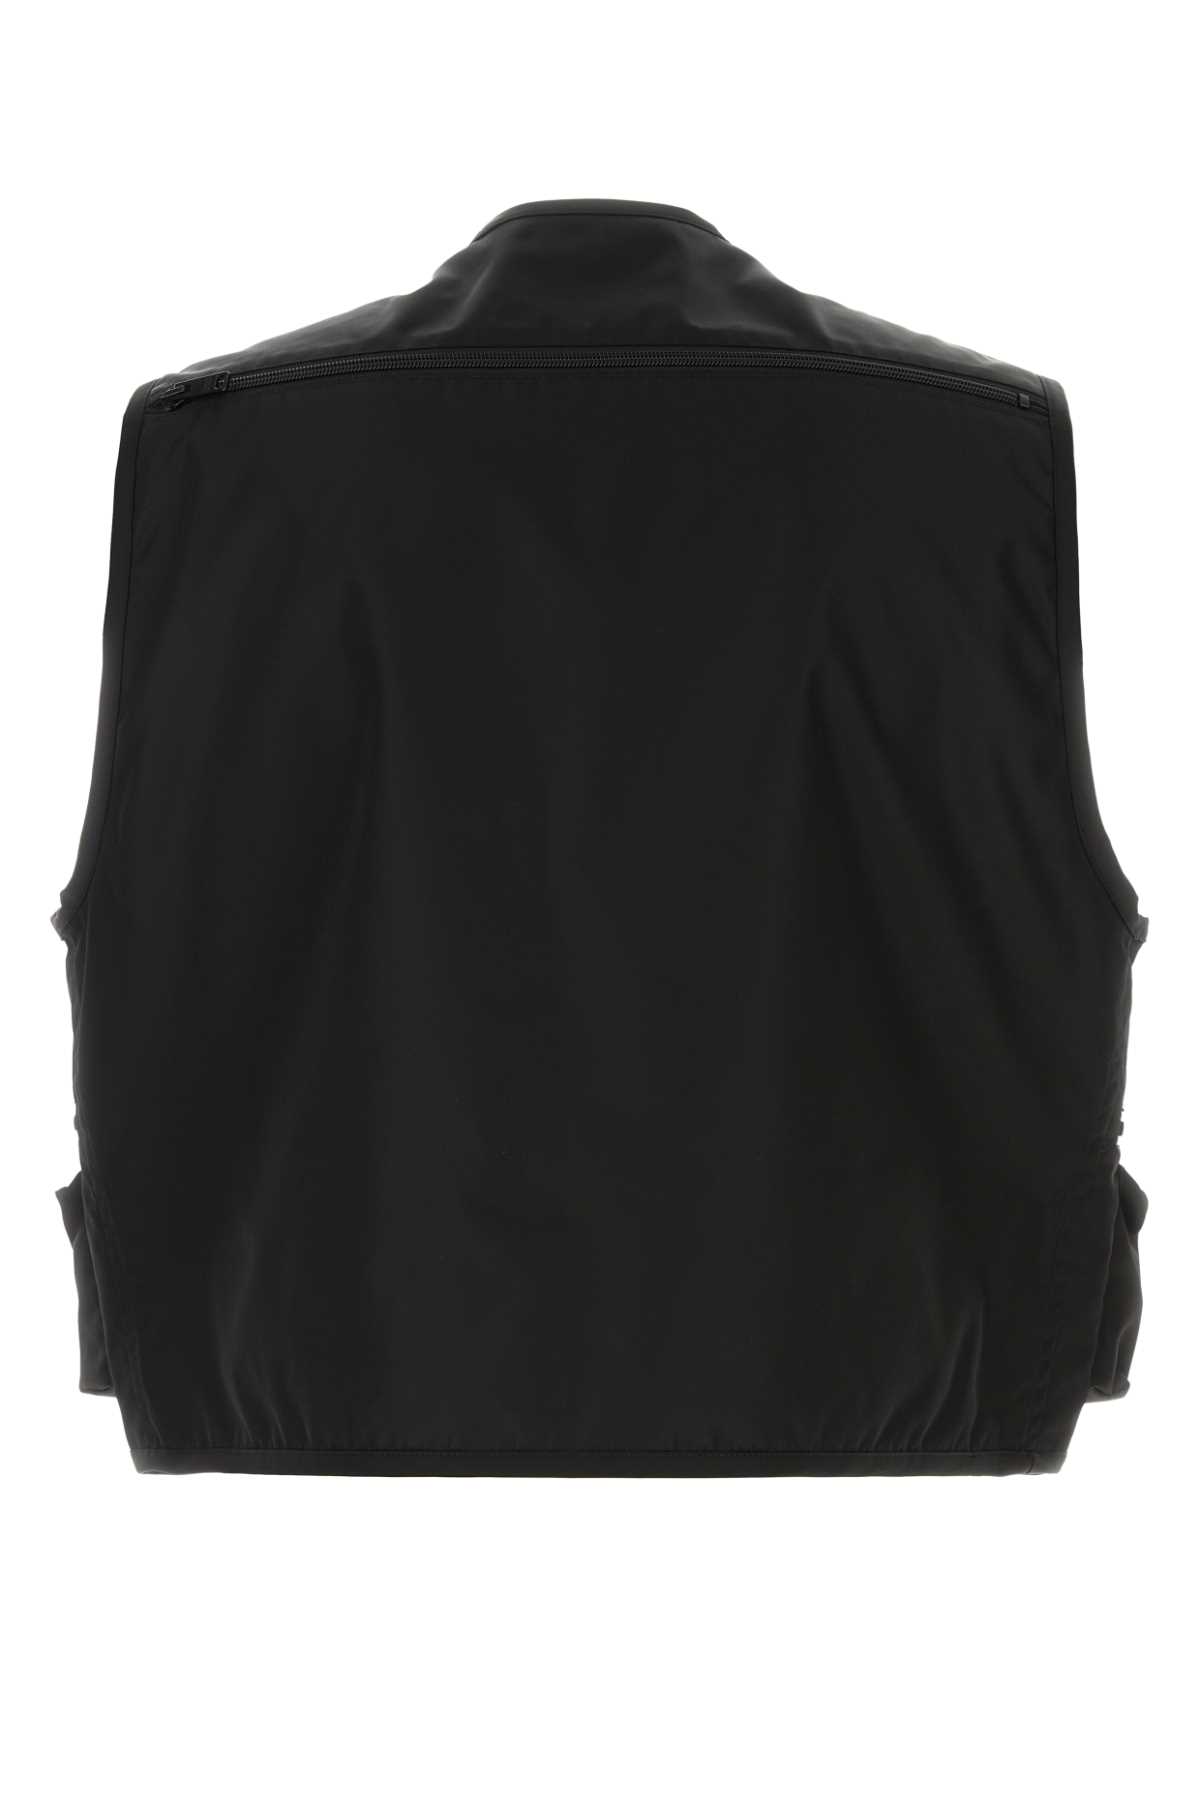 Prada Black Re-nylon Vest